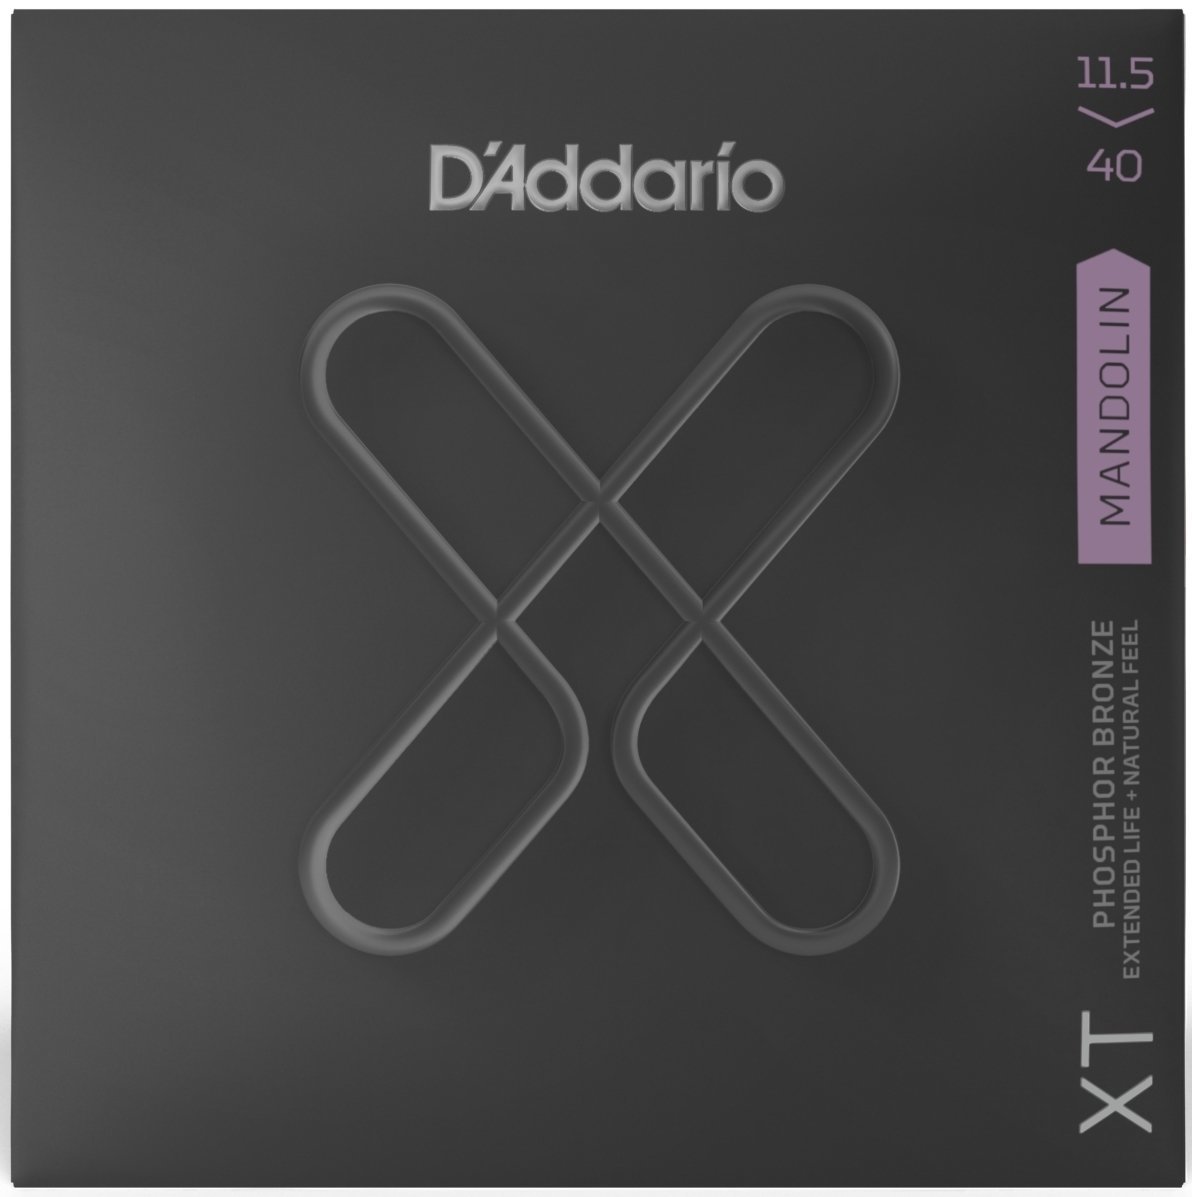 Mandoline Strings D'Addario XTM11540